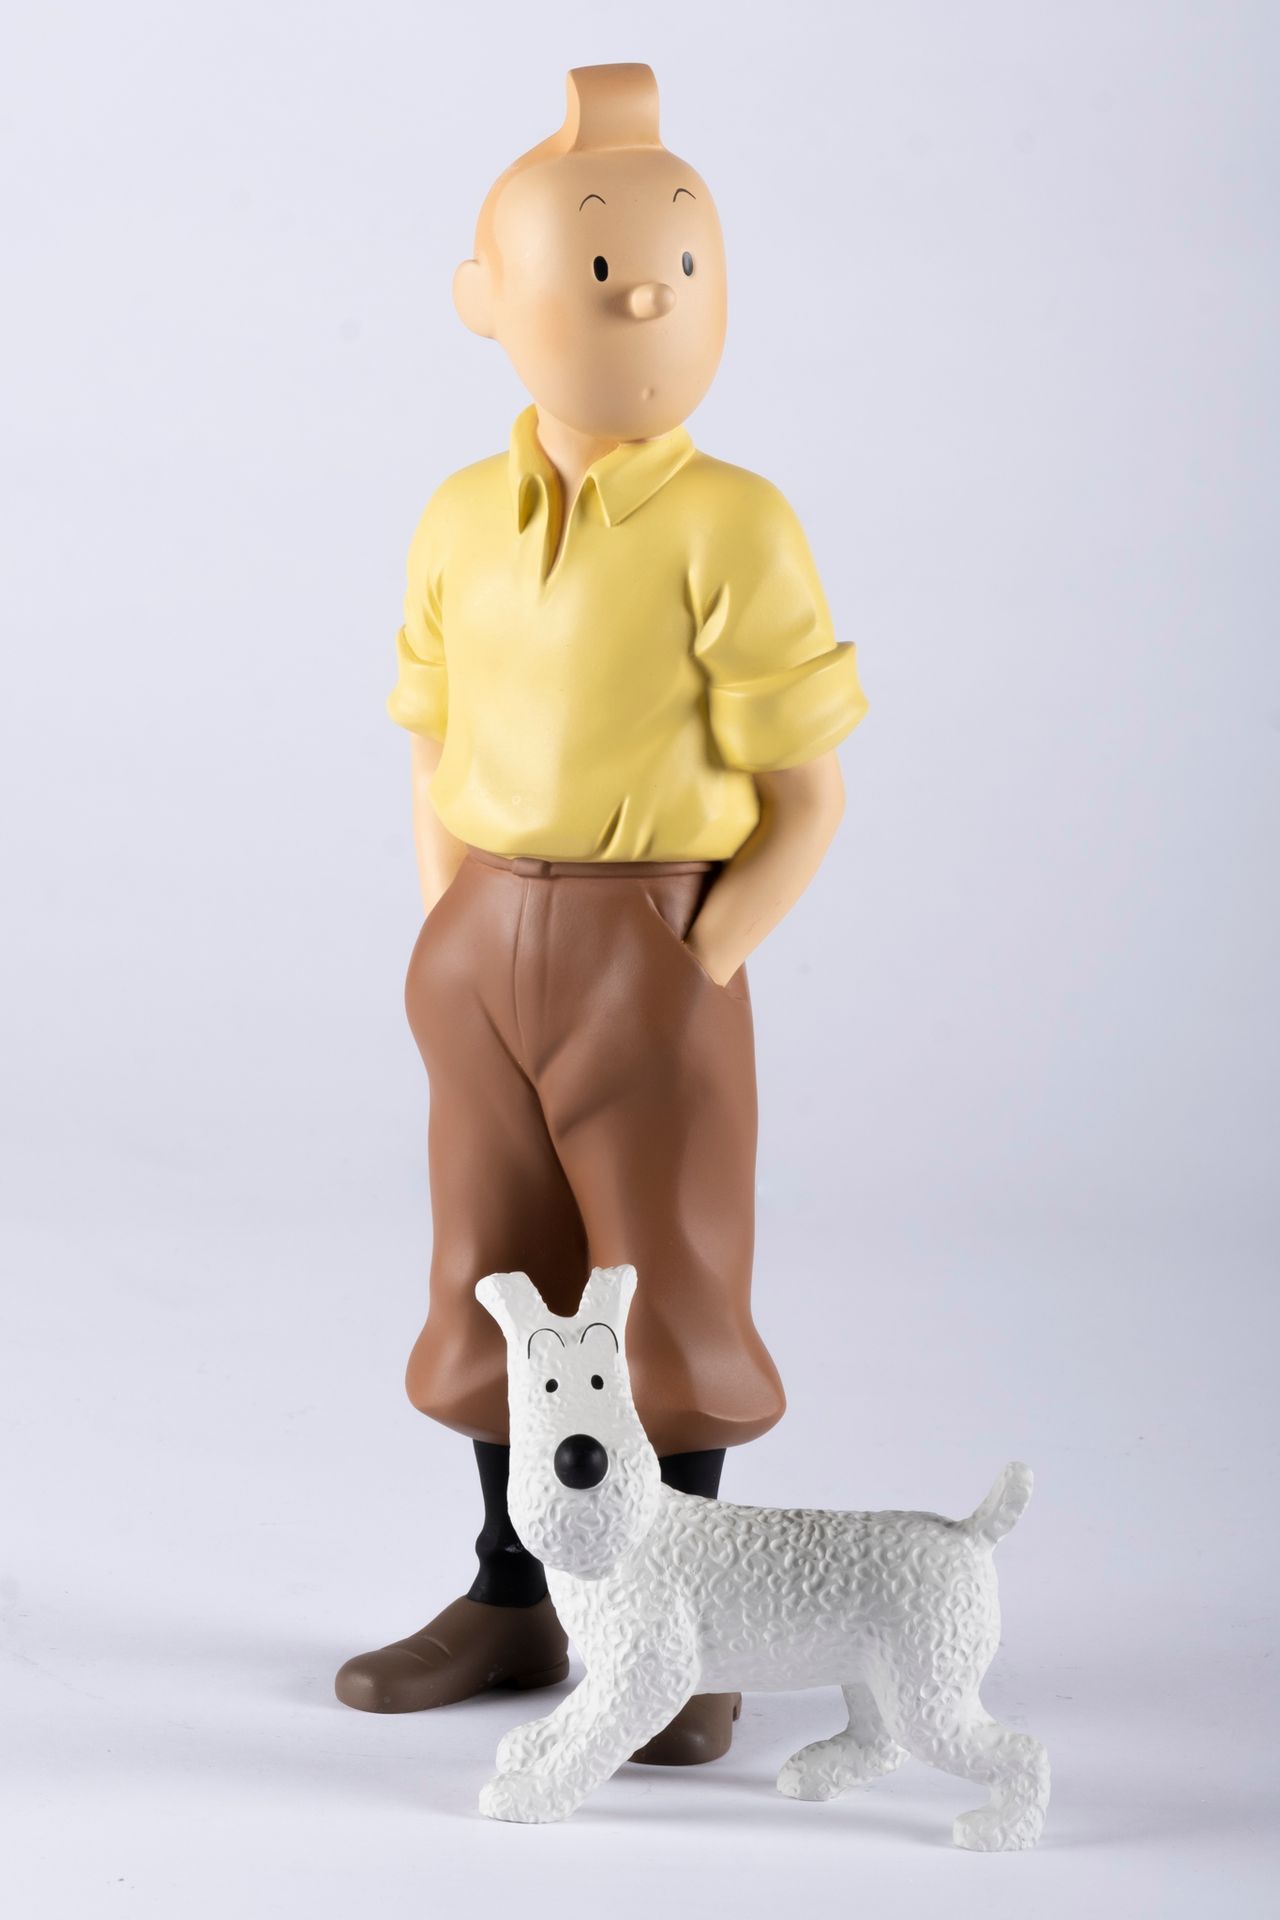 HERGÉ, Georges Remi dit (1907-1983) Tintin - Moulinsart resin statuette, Ref.459&hellip;